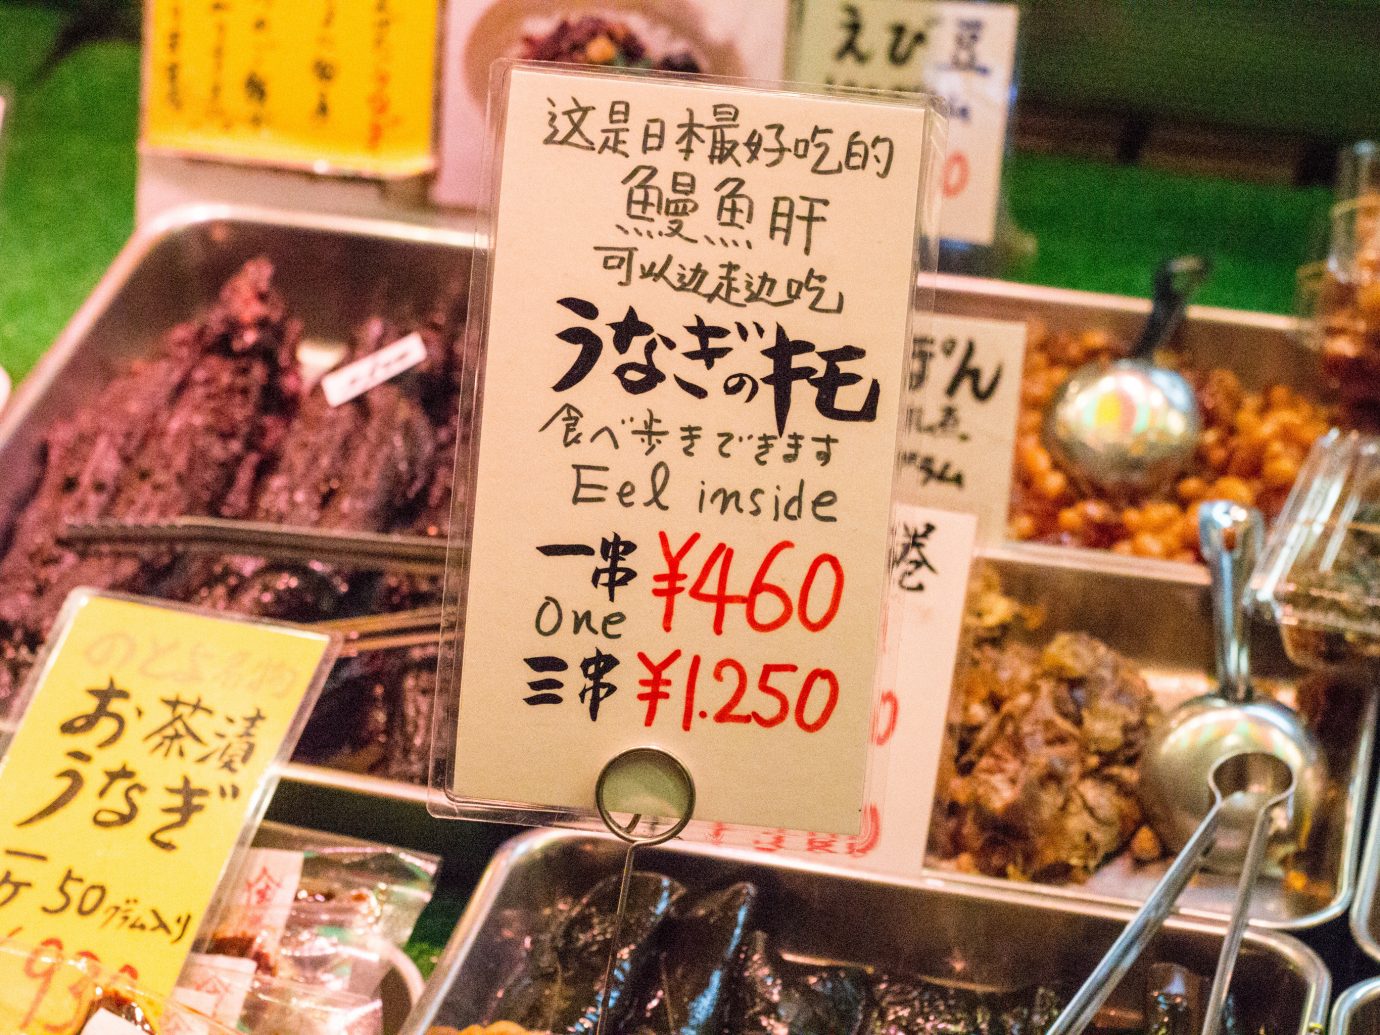 Nishiki Market in Kyoto